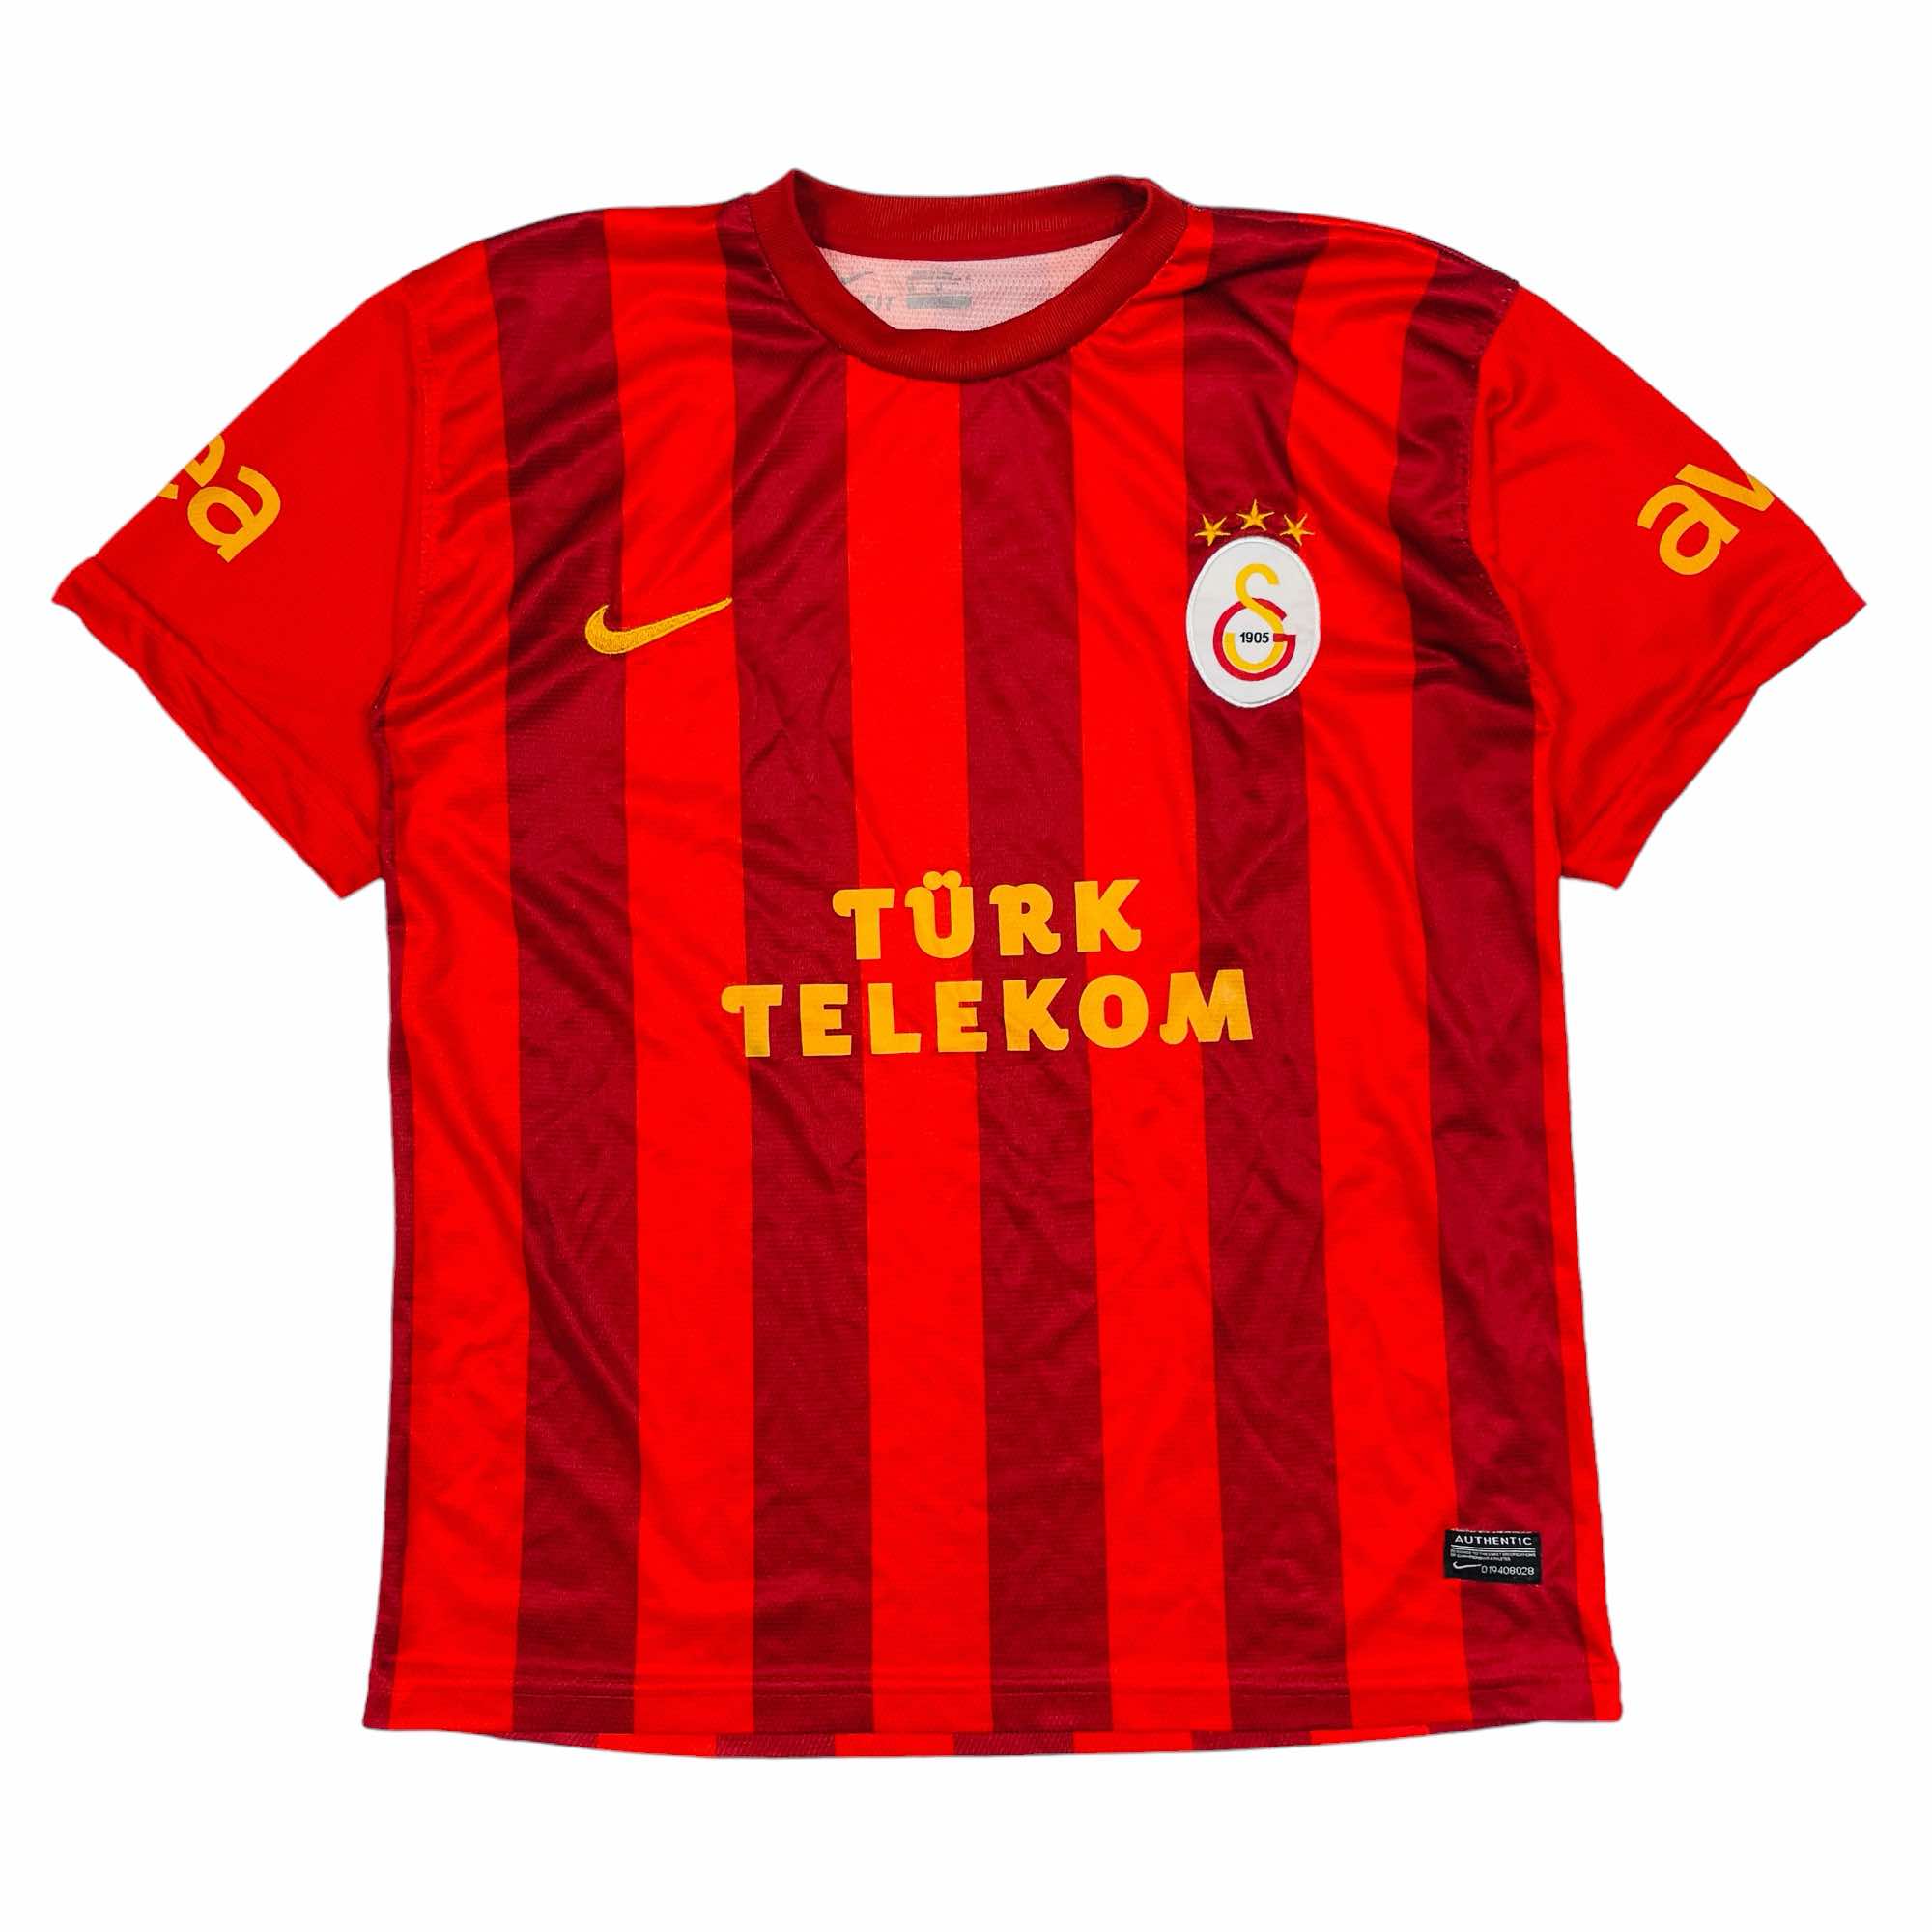 Galatasaray 2013/14 Nike Shirt - Medium